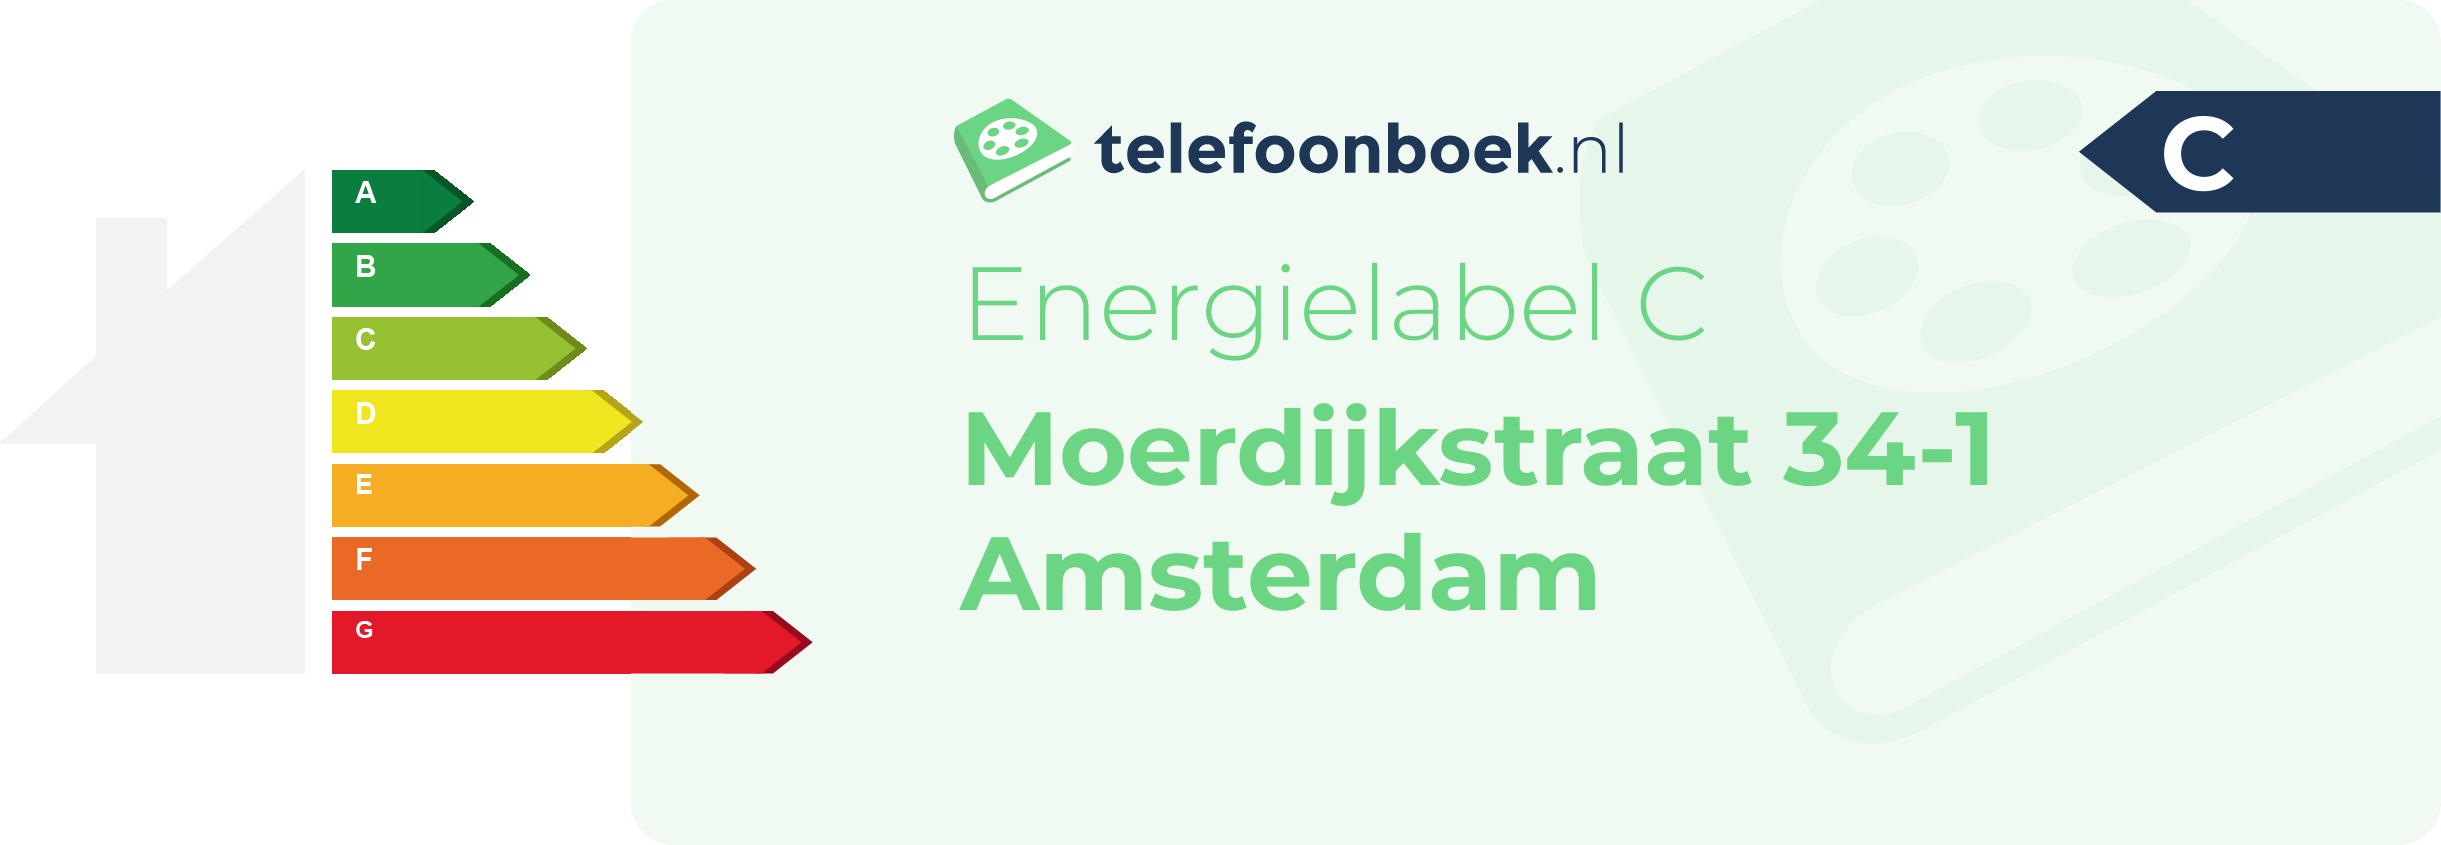 Energielabel Moerdijkstraat 34-1 Amsterdam